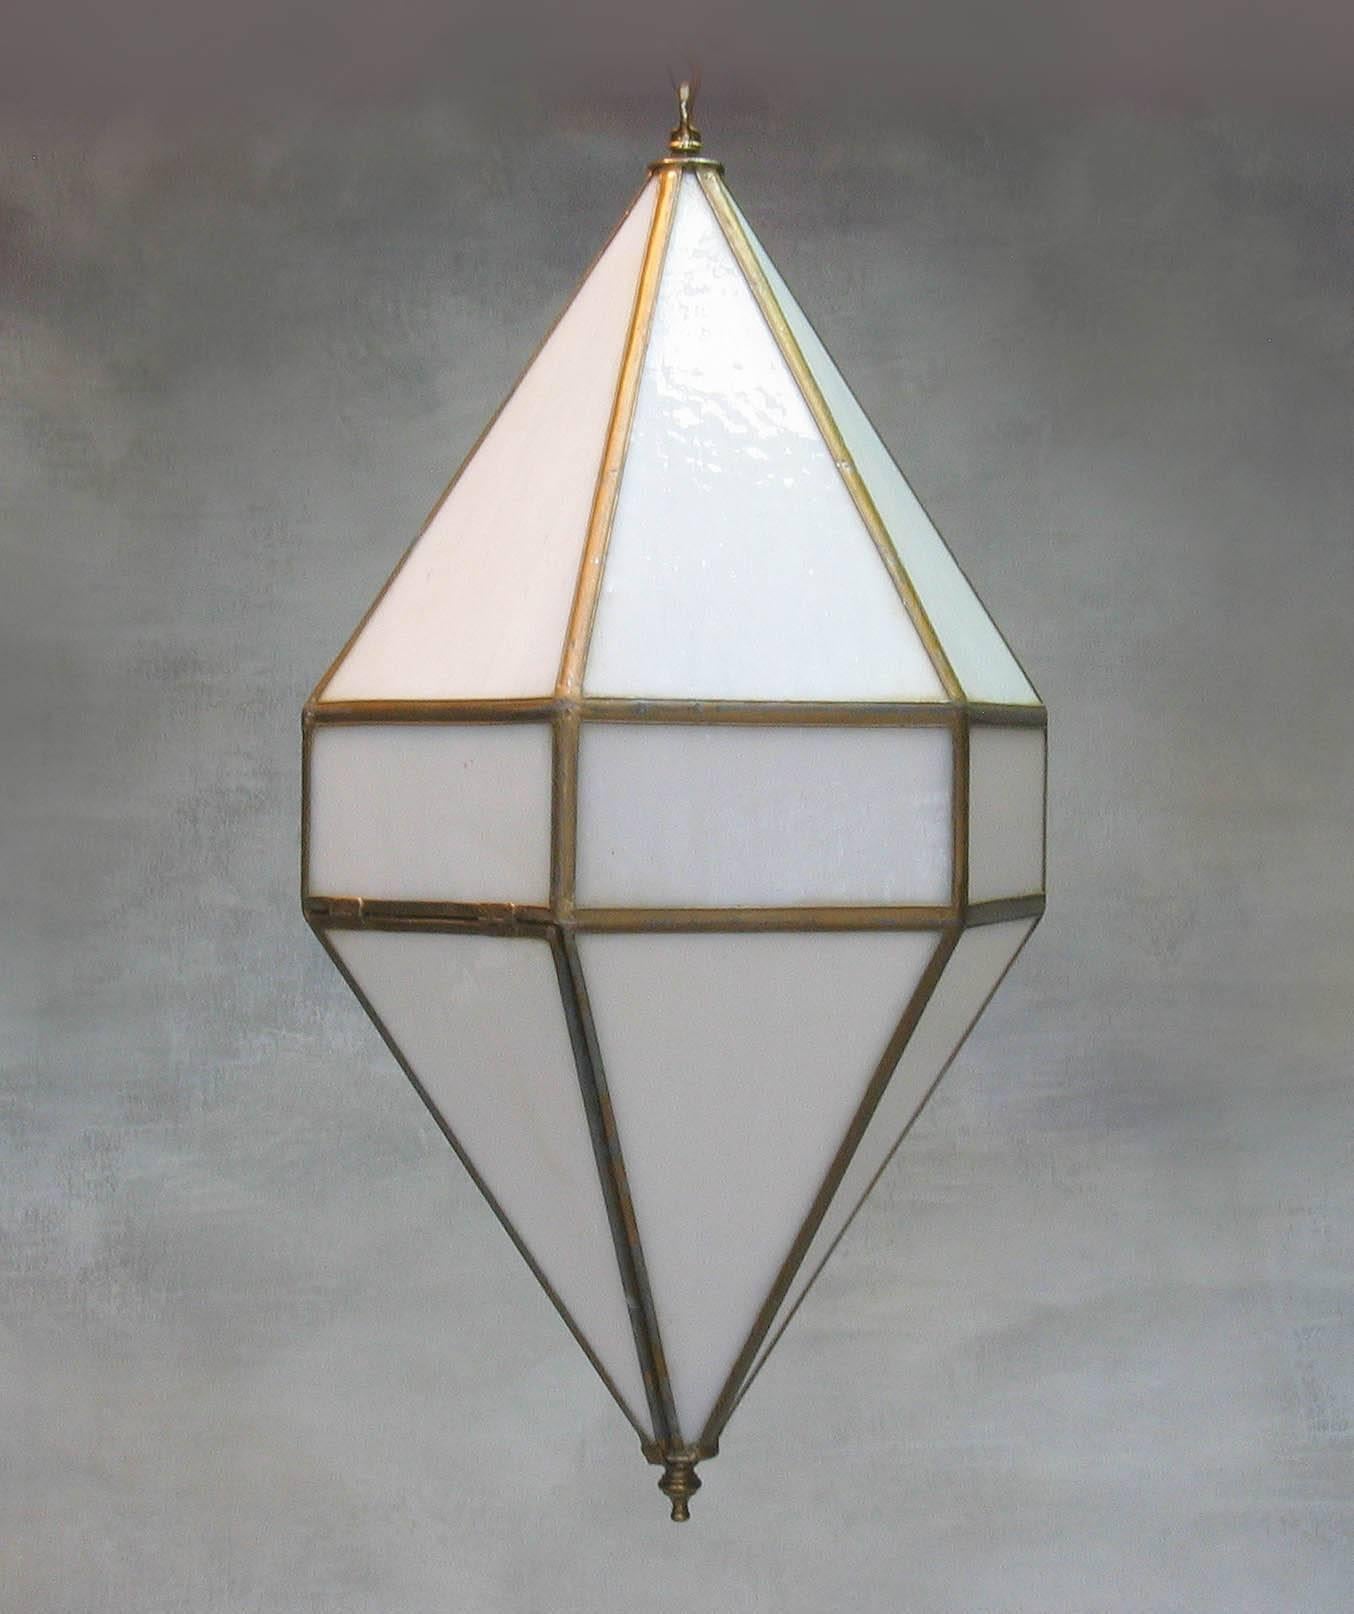 Hand-Knotted Diamond Shaped Hexagonal Milk Glass Pendant Light, Spain, 1960